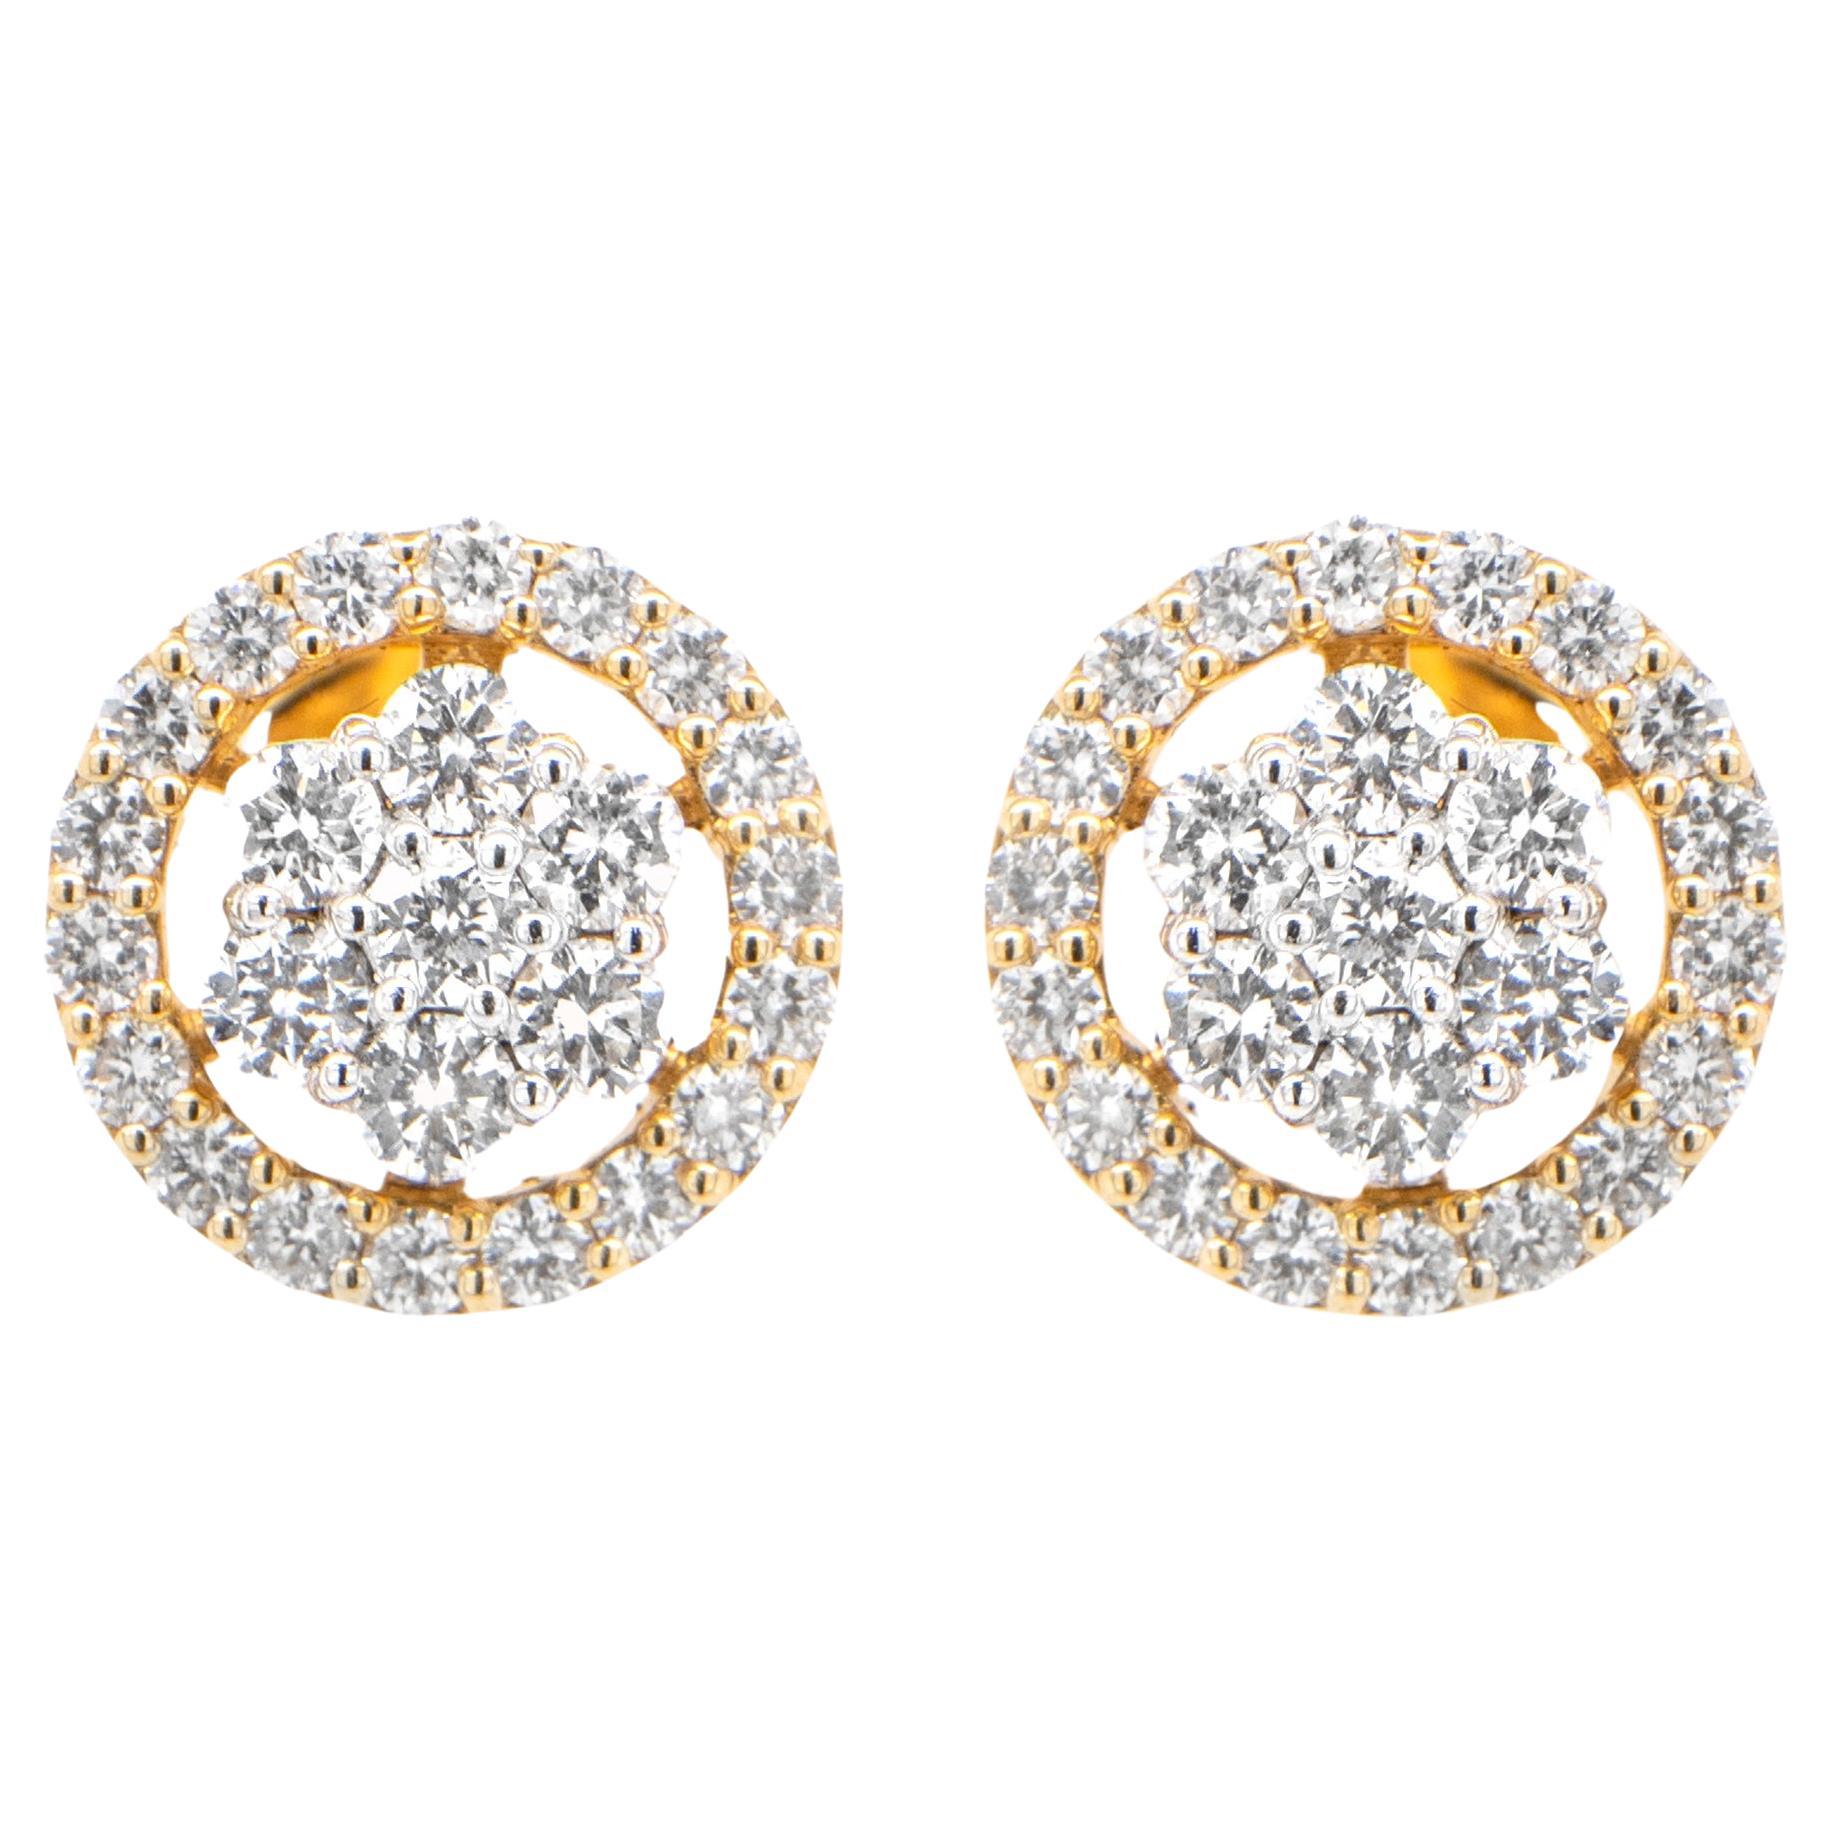 Diamond Stud Earrings 2.40 Carats Total 18k Yellow Gold